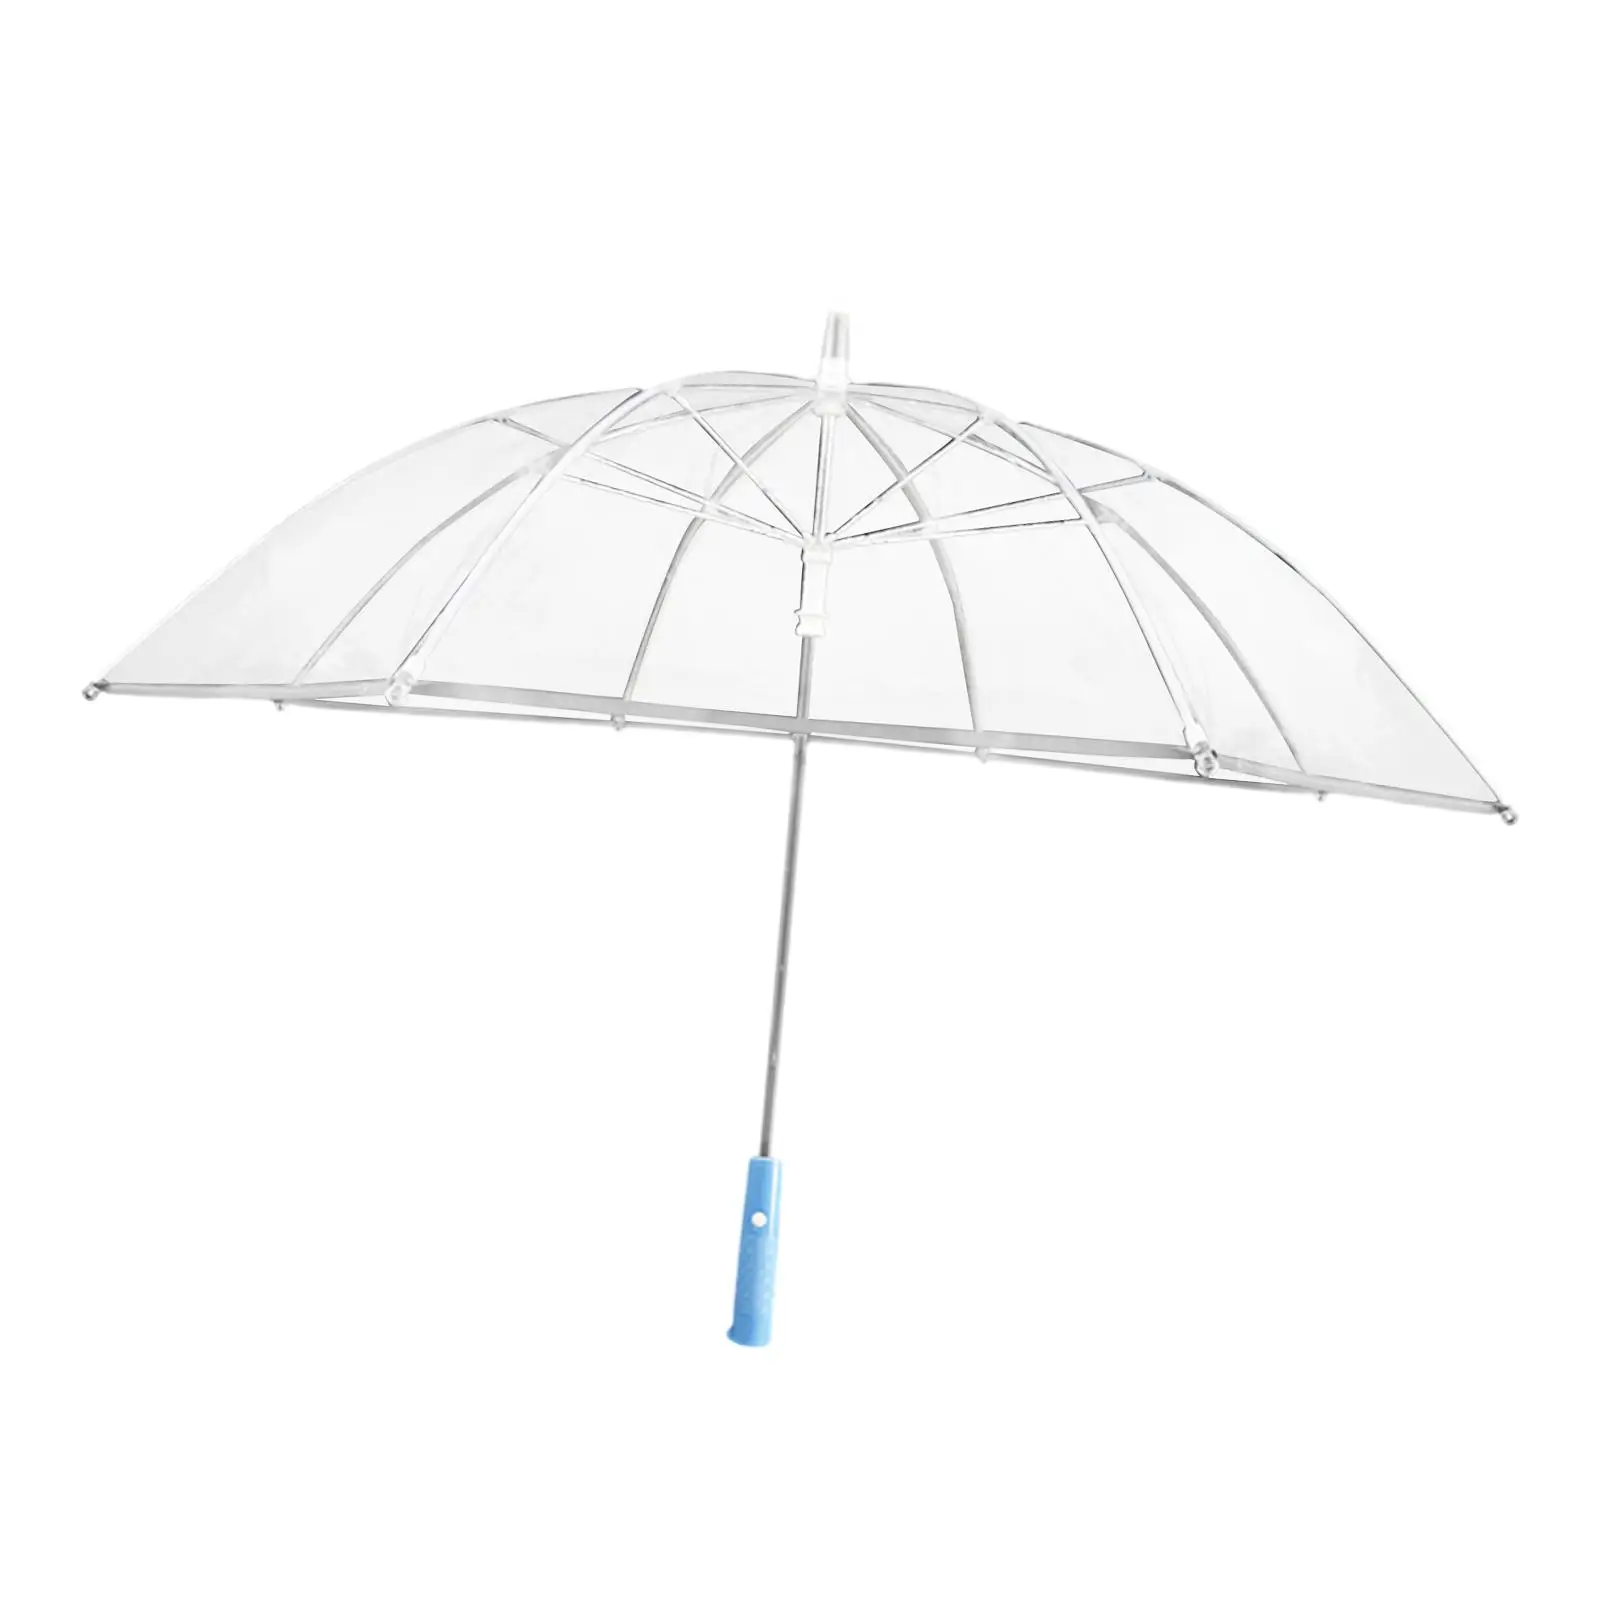 LED Umbrella Stick Umbrella Long Handle Umbrella Lightweight Light up Umbrella Straight Umbrella for Climbing Outdoor Camping